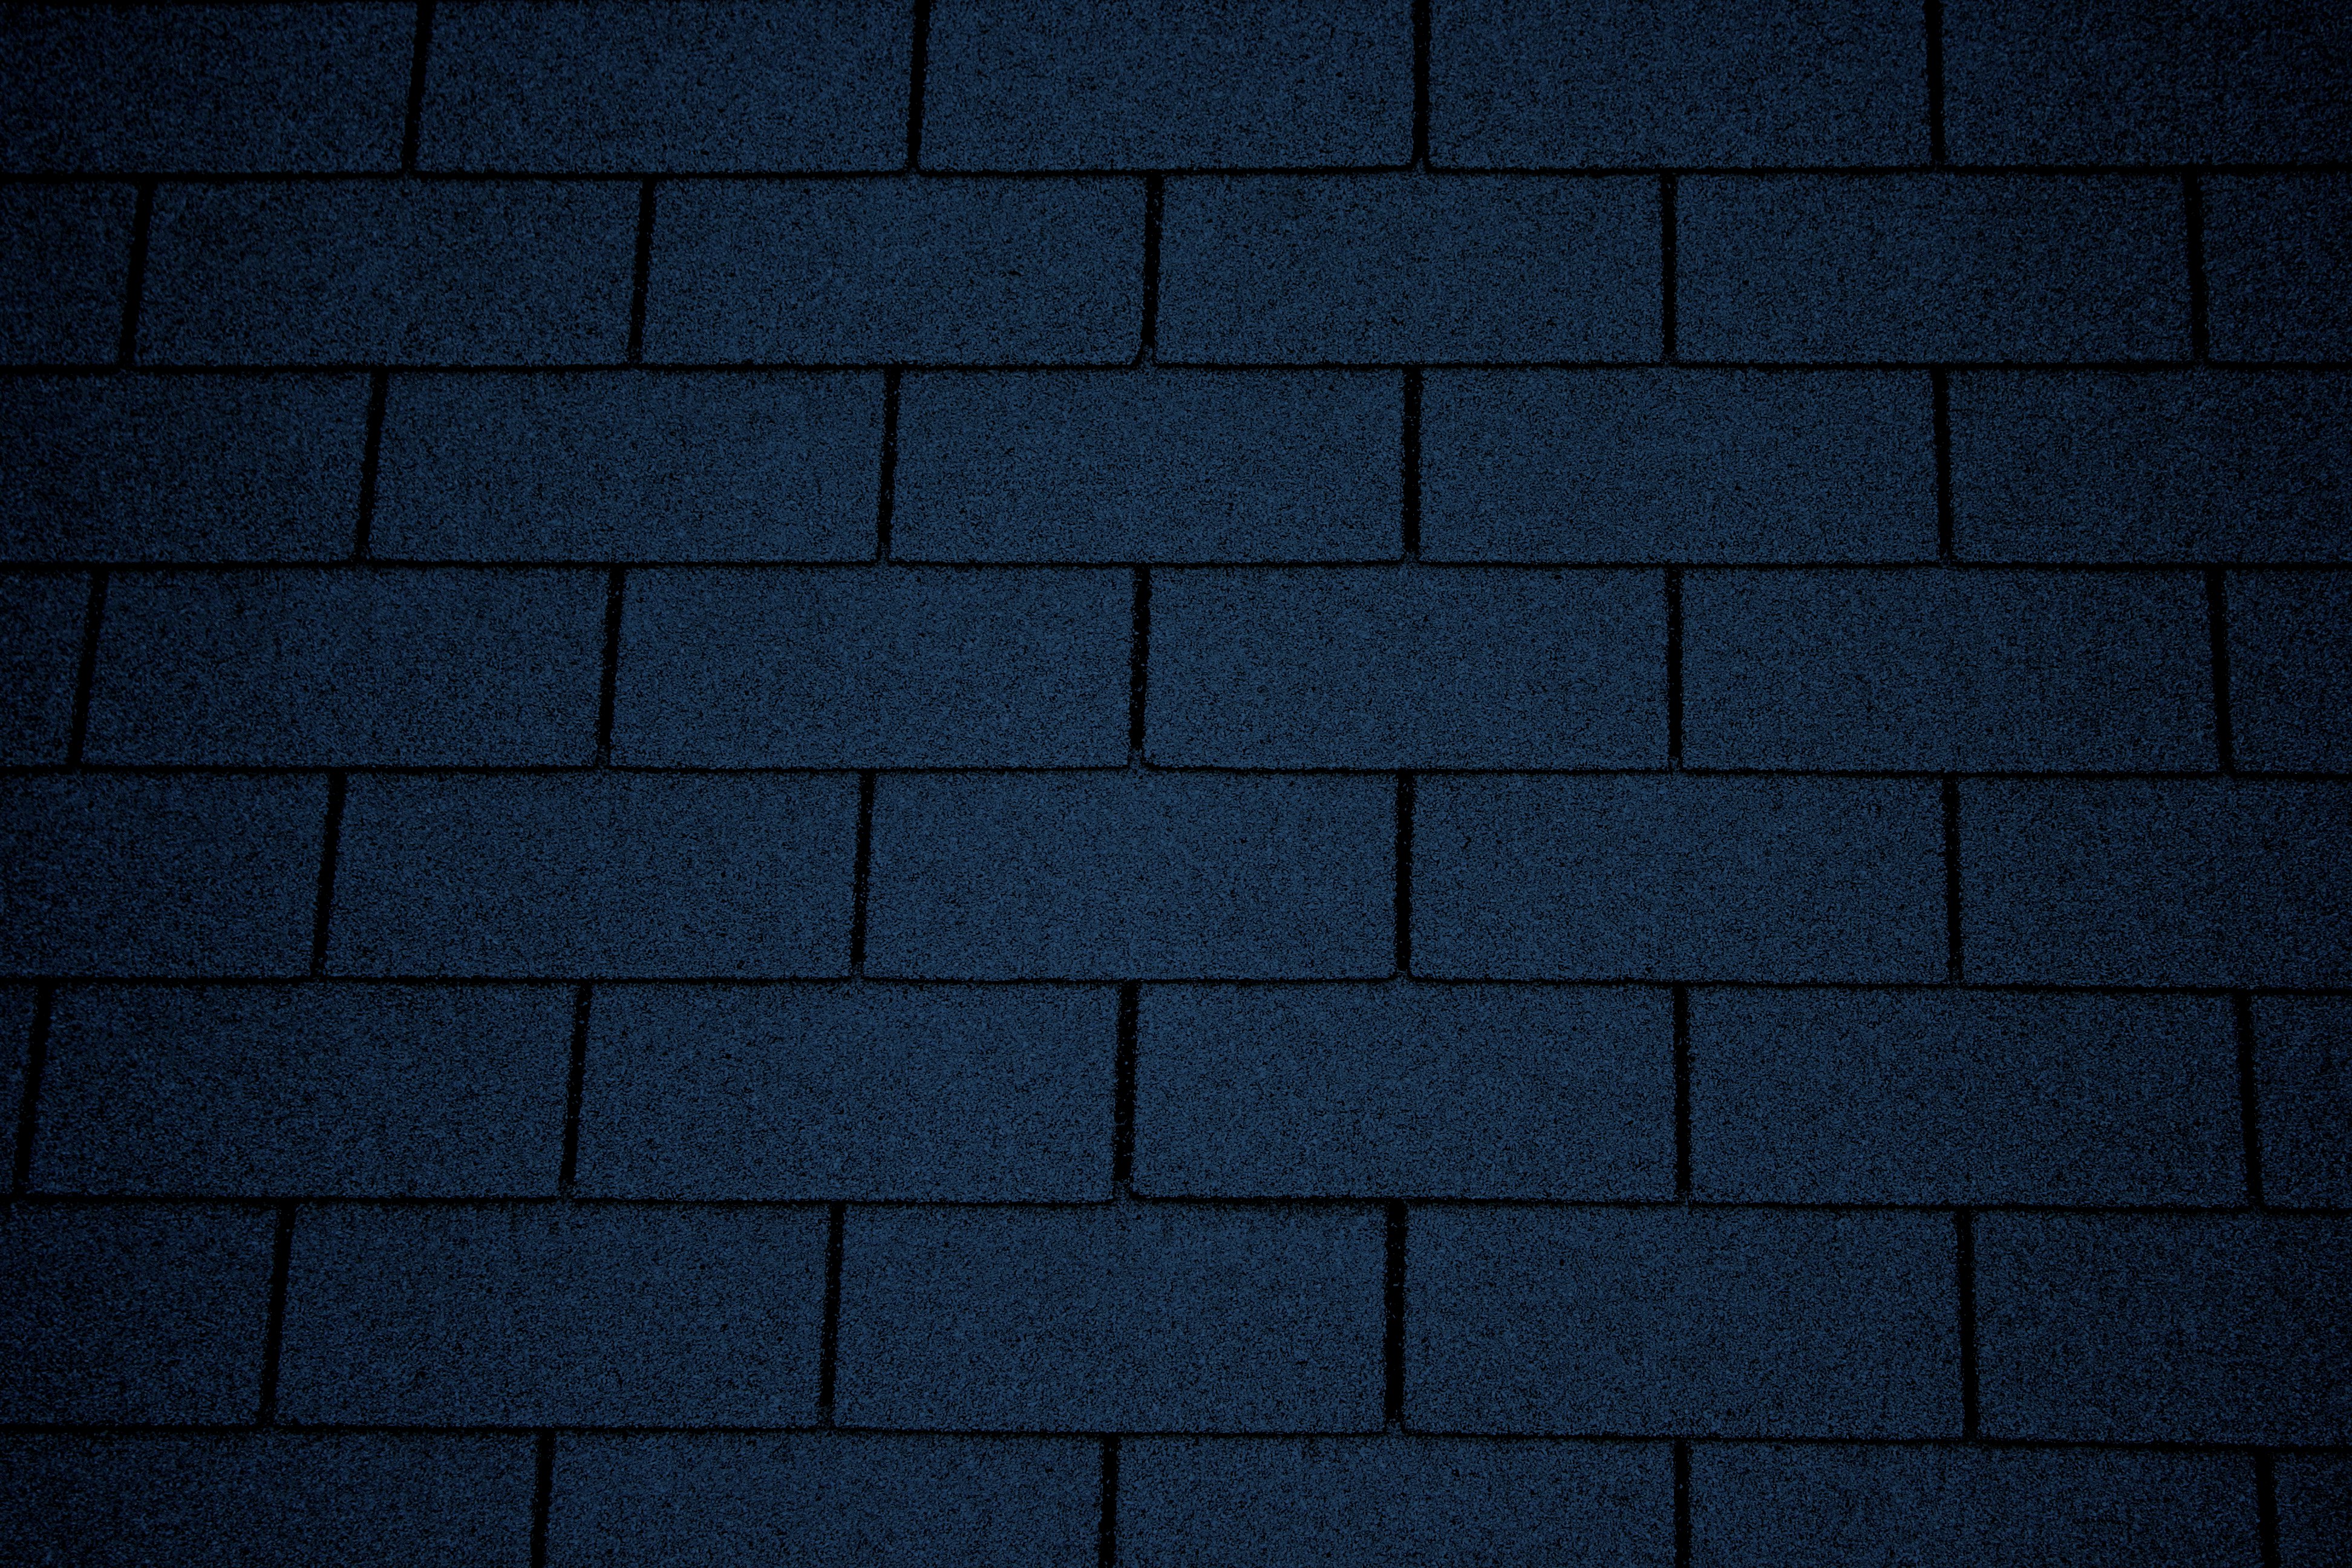 Dark Blue Asphalt Roof Shingles Texture Picture Photograph